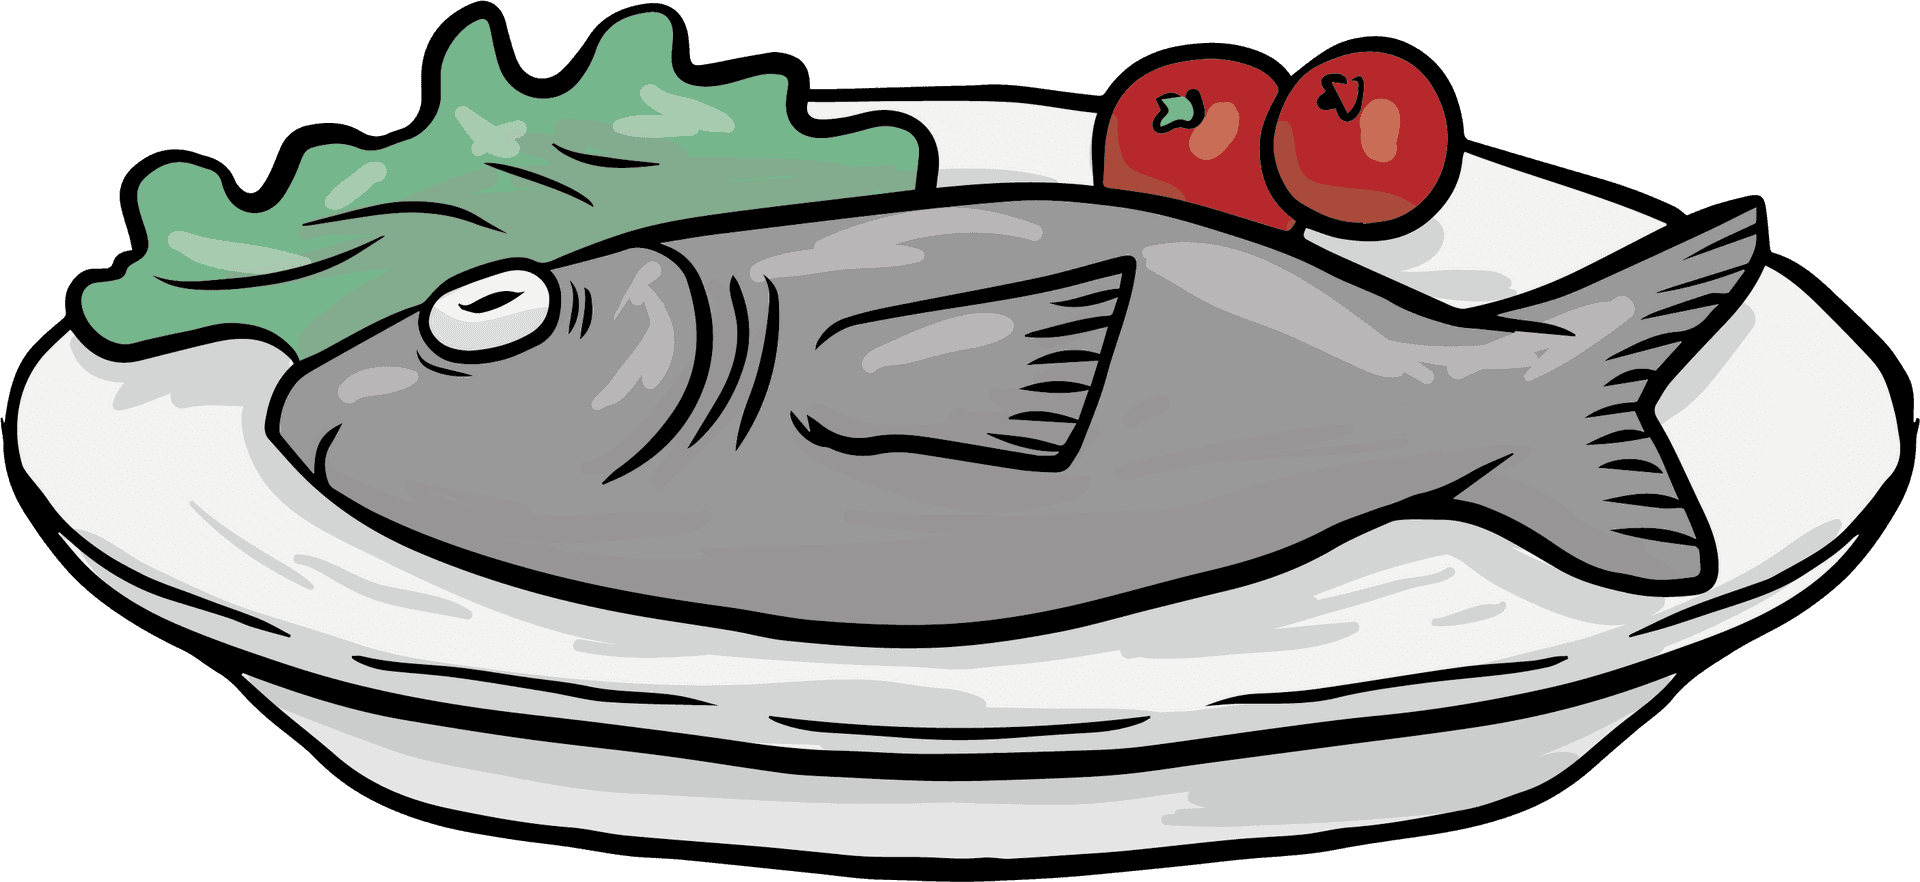 Fresh Fishon Plate Illustration PNG